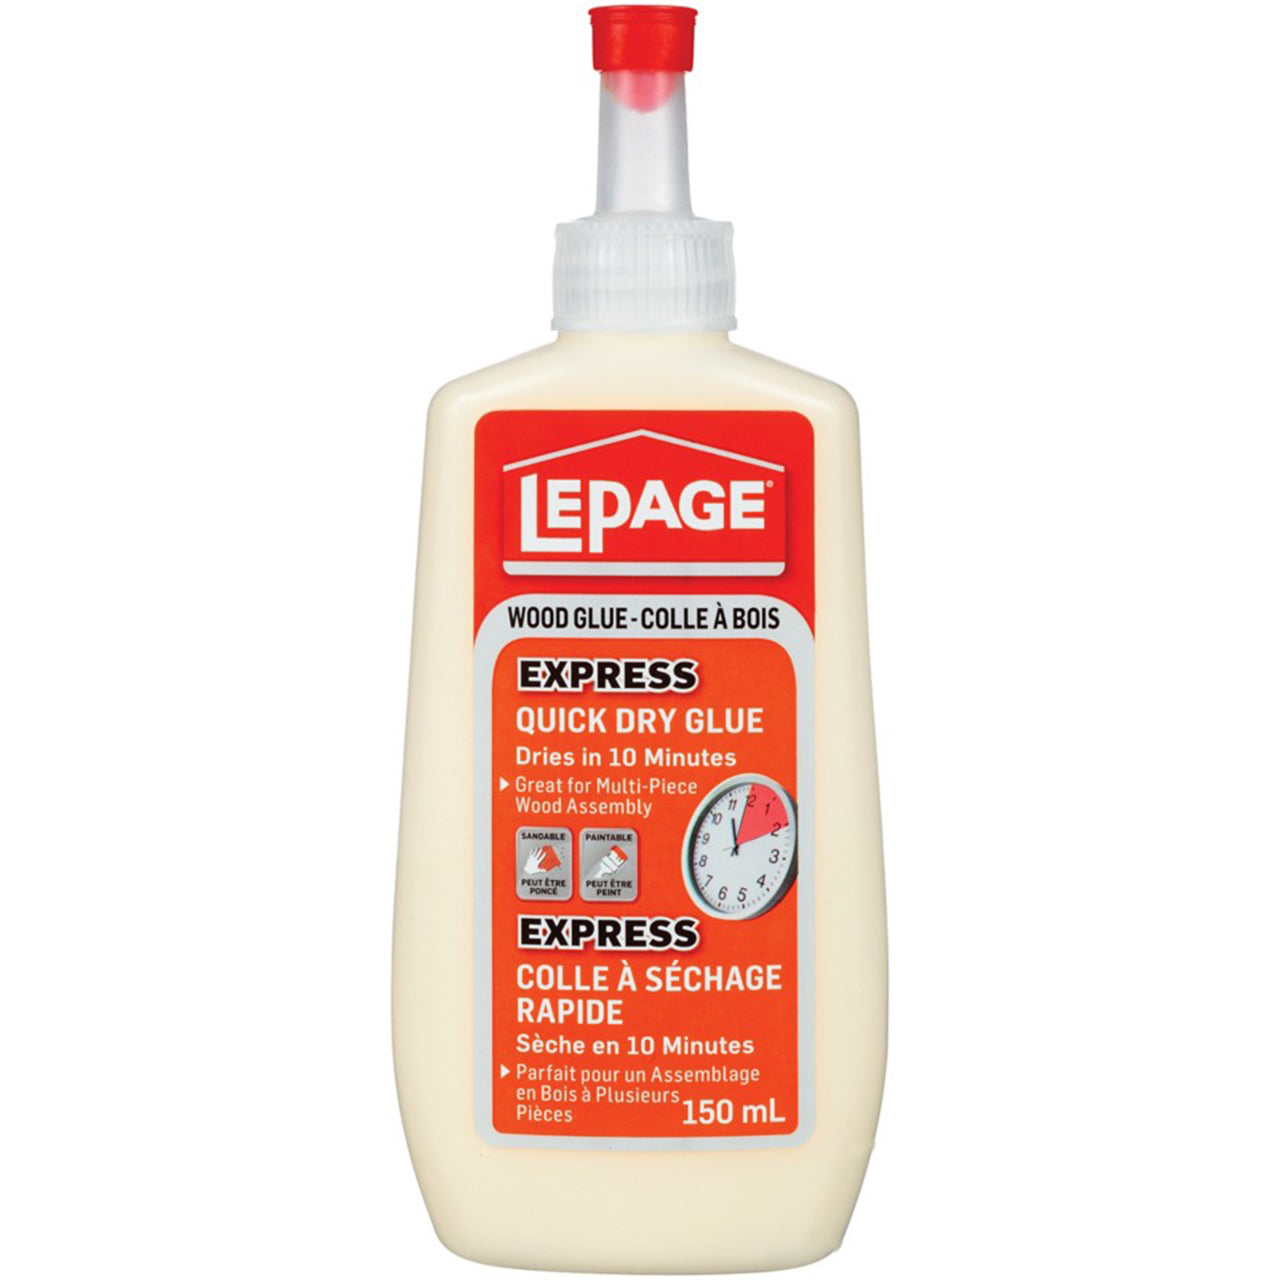 Lepage express wood glue